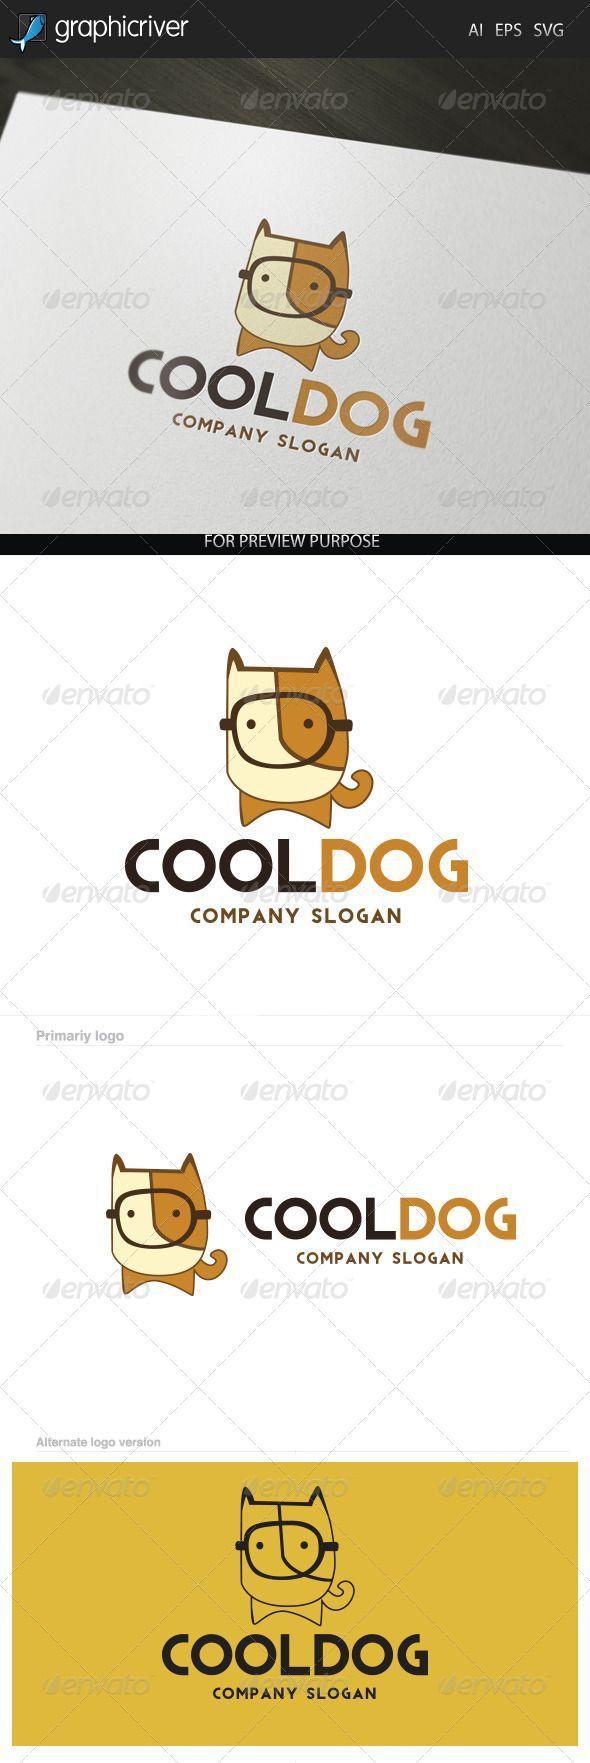 Cool Dogs Logo - Cool Dog Logo | Fonts-logos-icons | Pinterest | Kindergarten logo ...